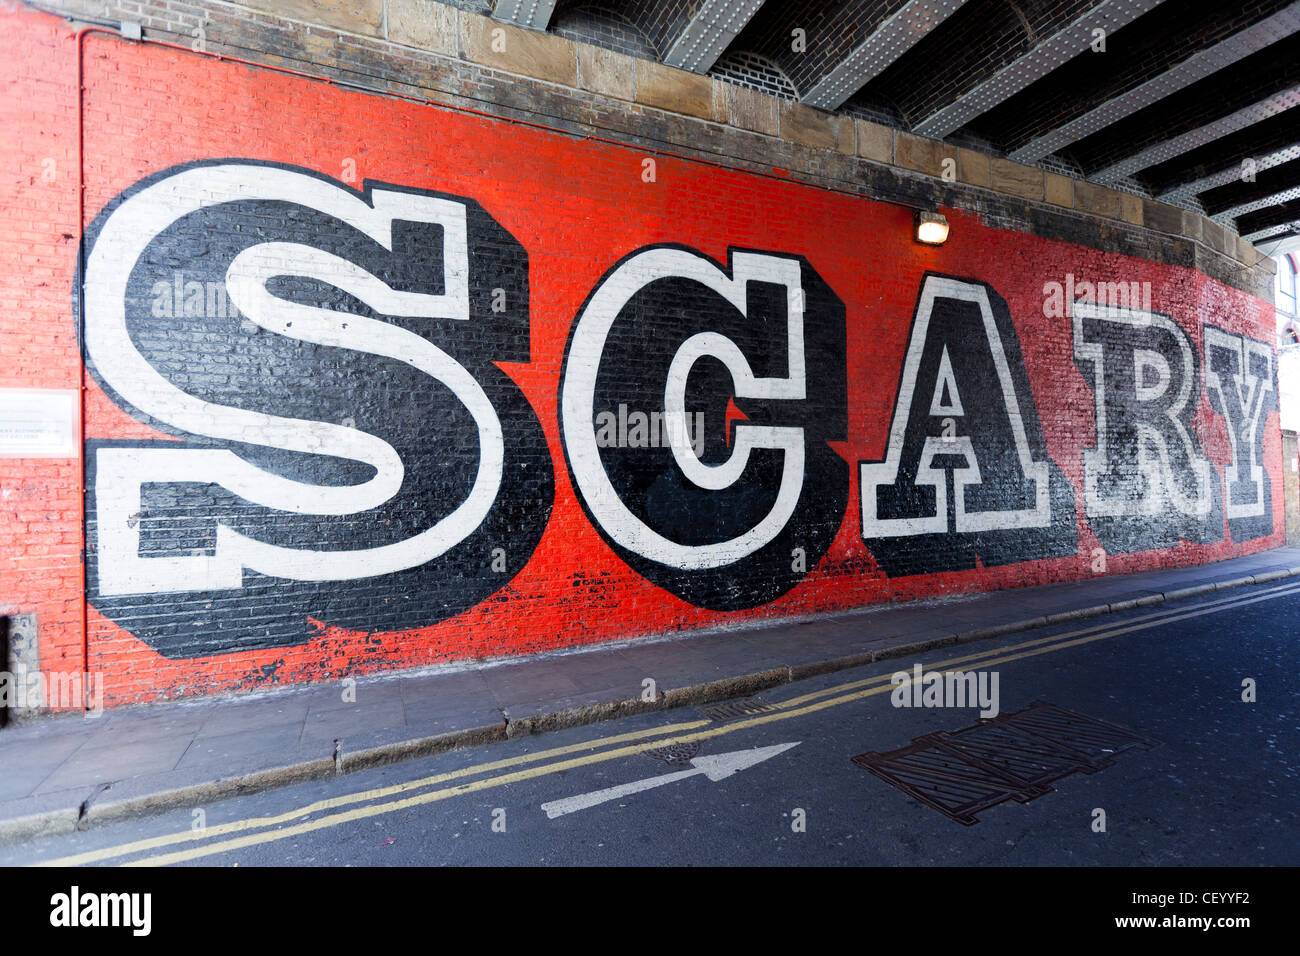 SCARY Street Art by Ben Eine, Rivington Street , Shoreditch, London, England, UK. Stock Photo